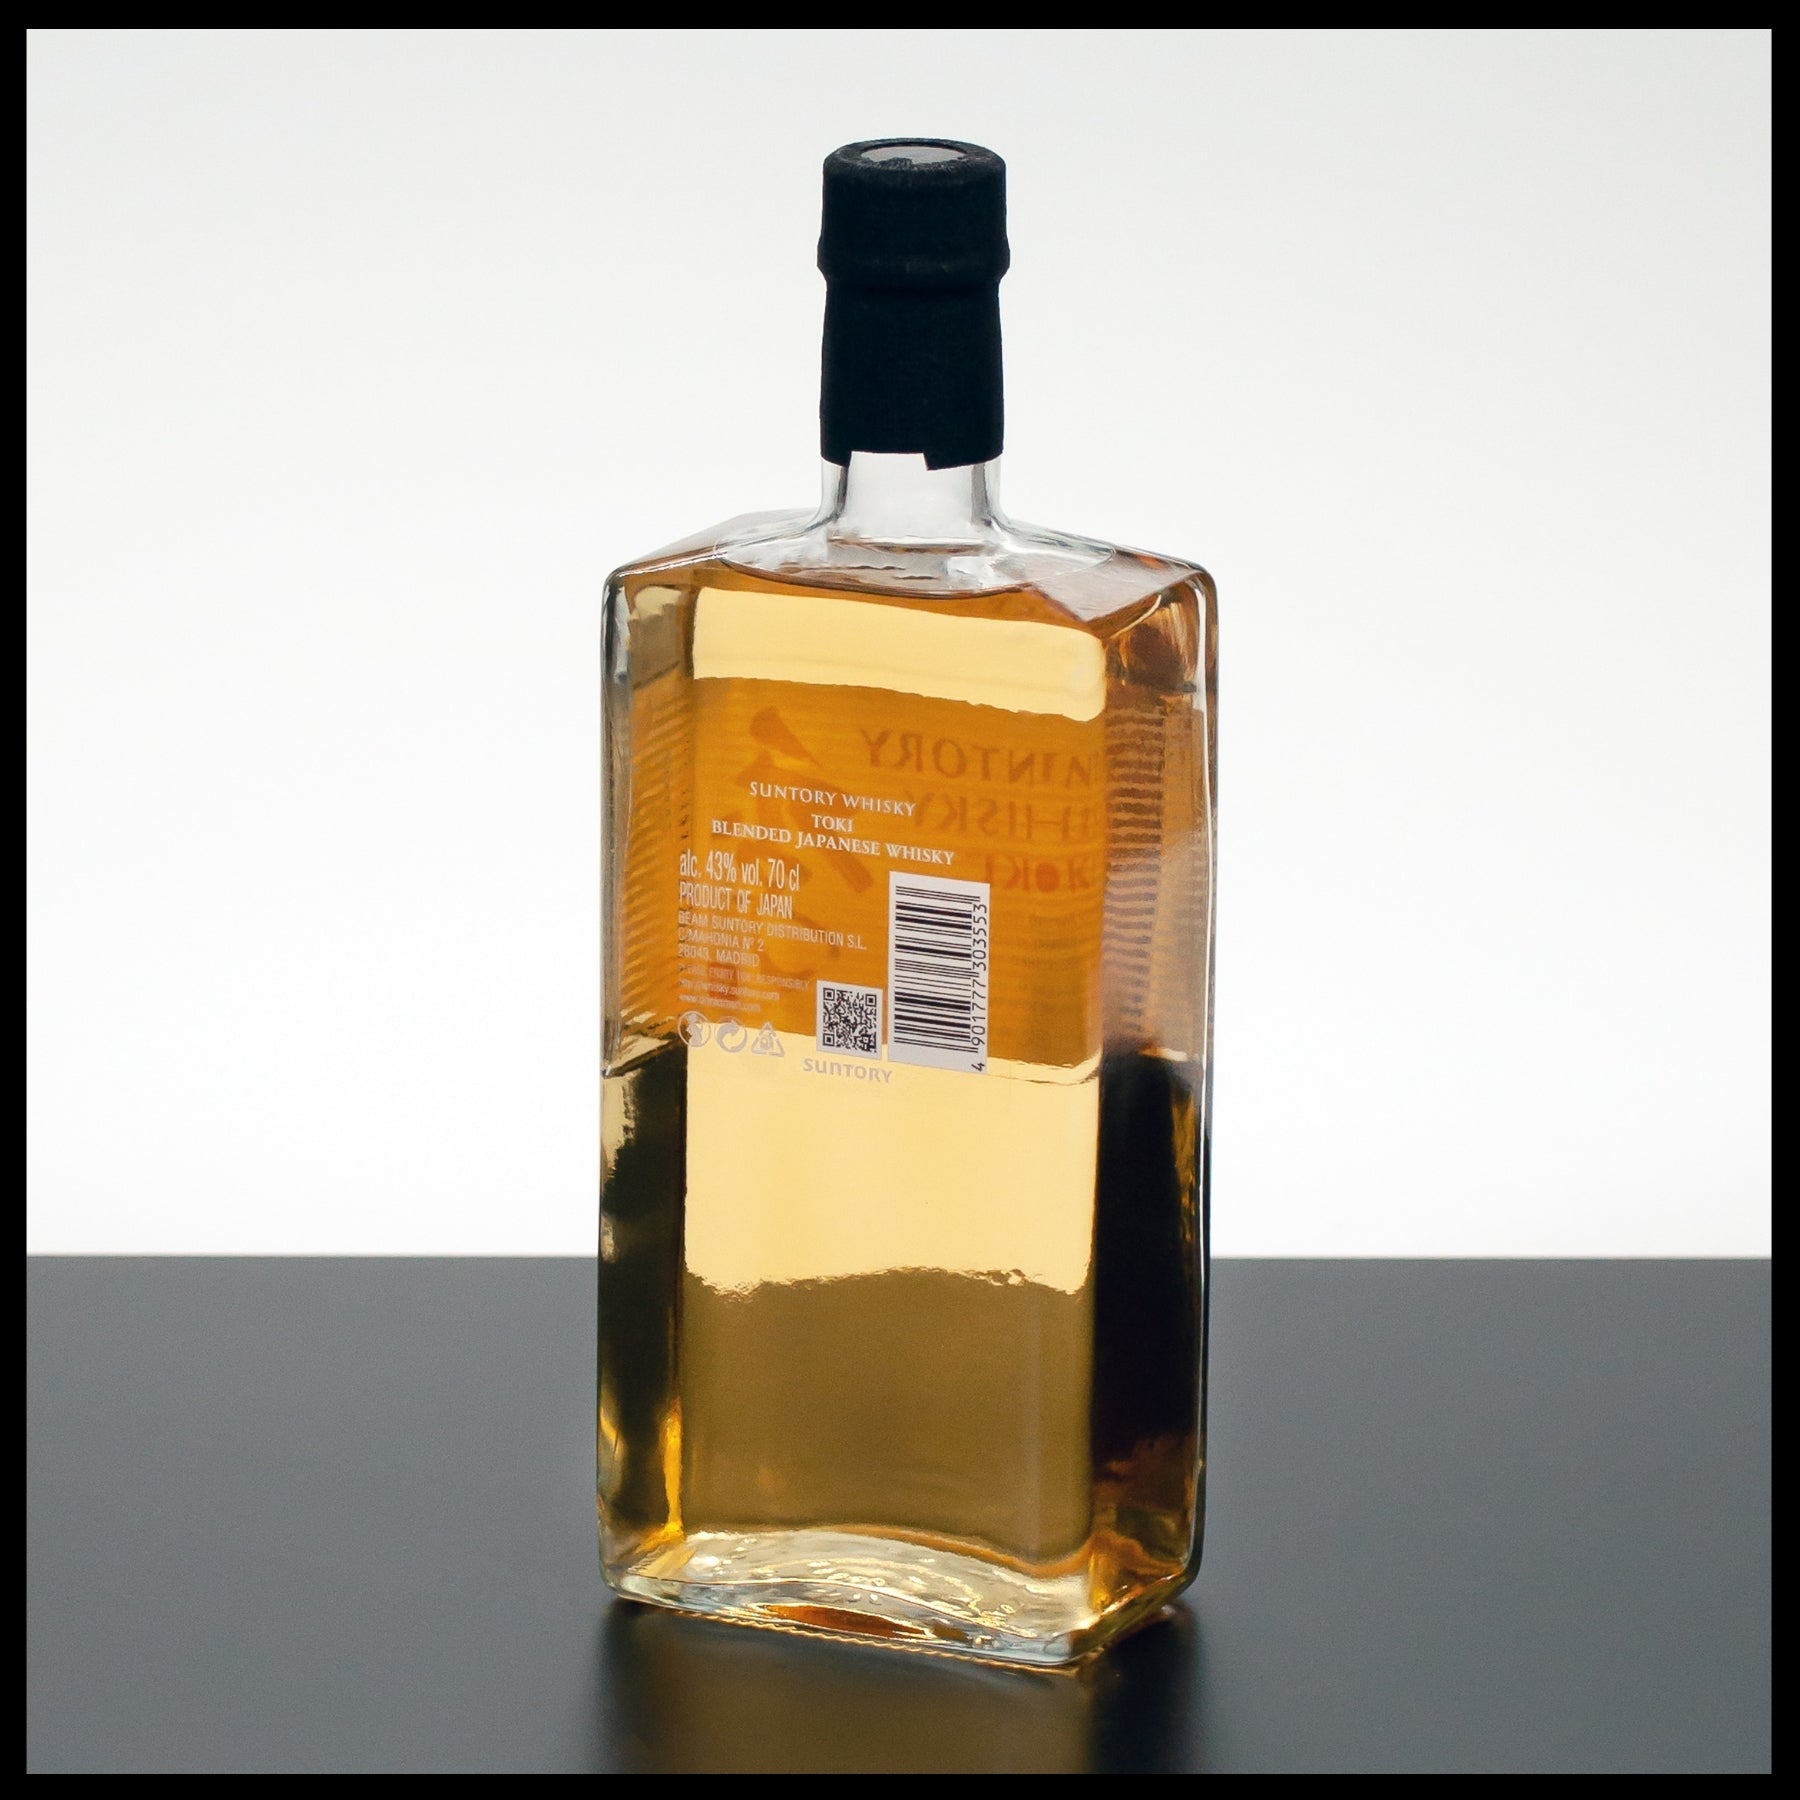 Suntory Toki Whisky 0,7L - 43% - Trinklusiv